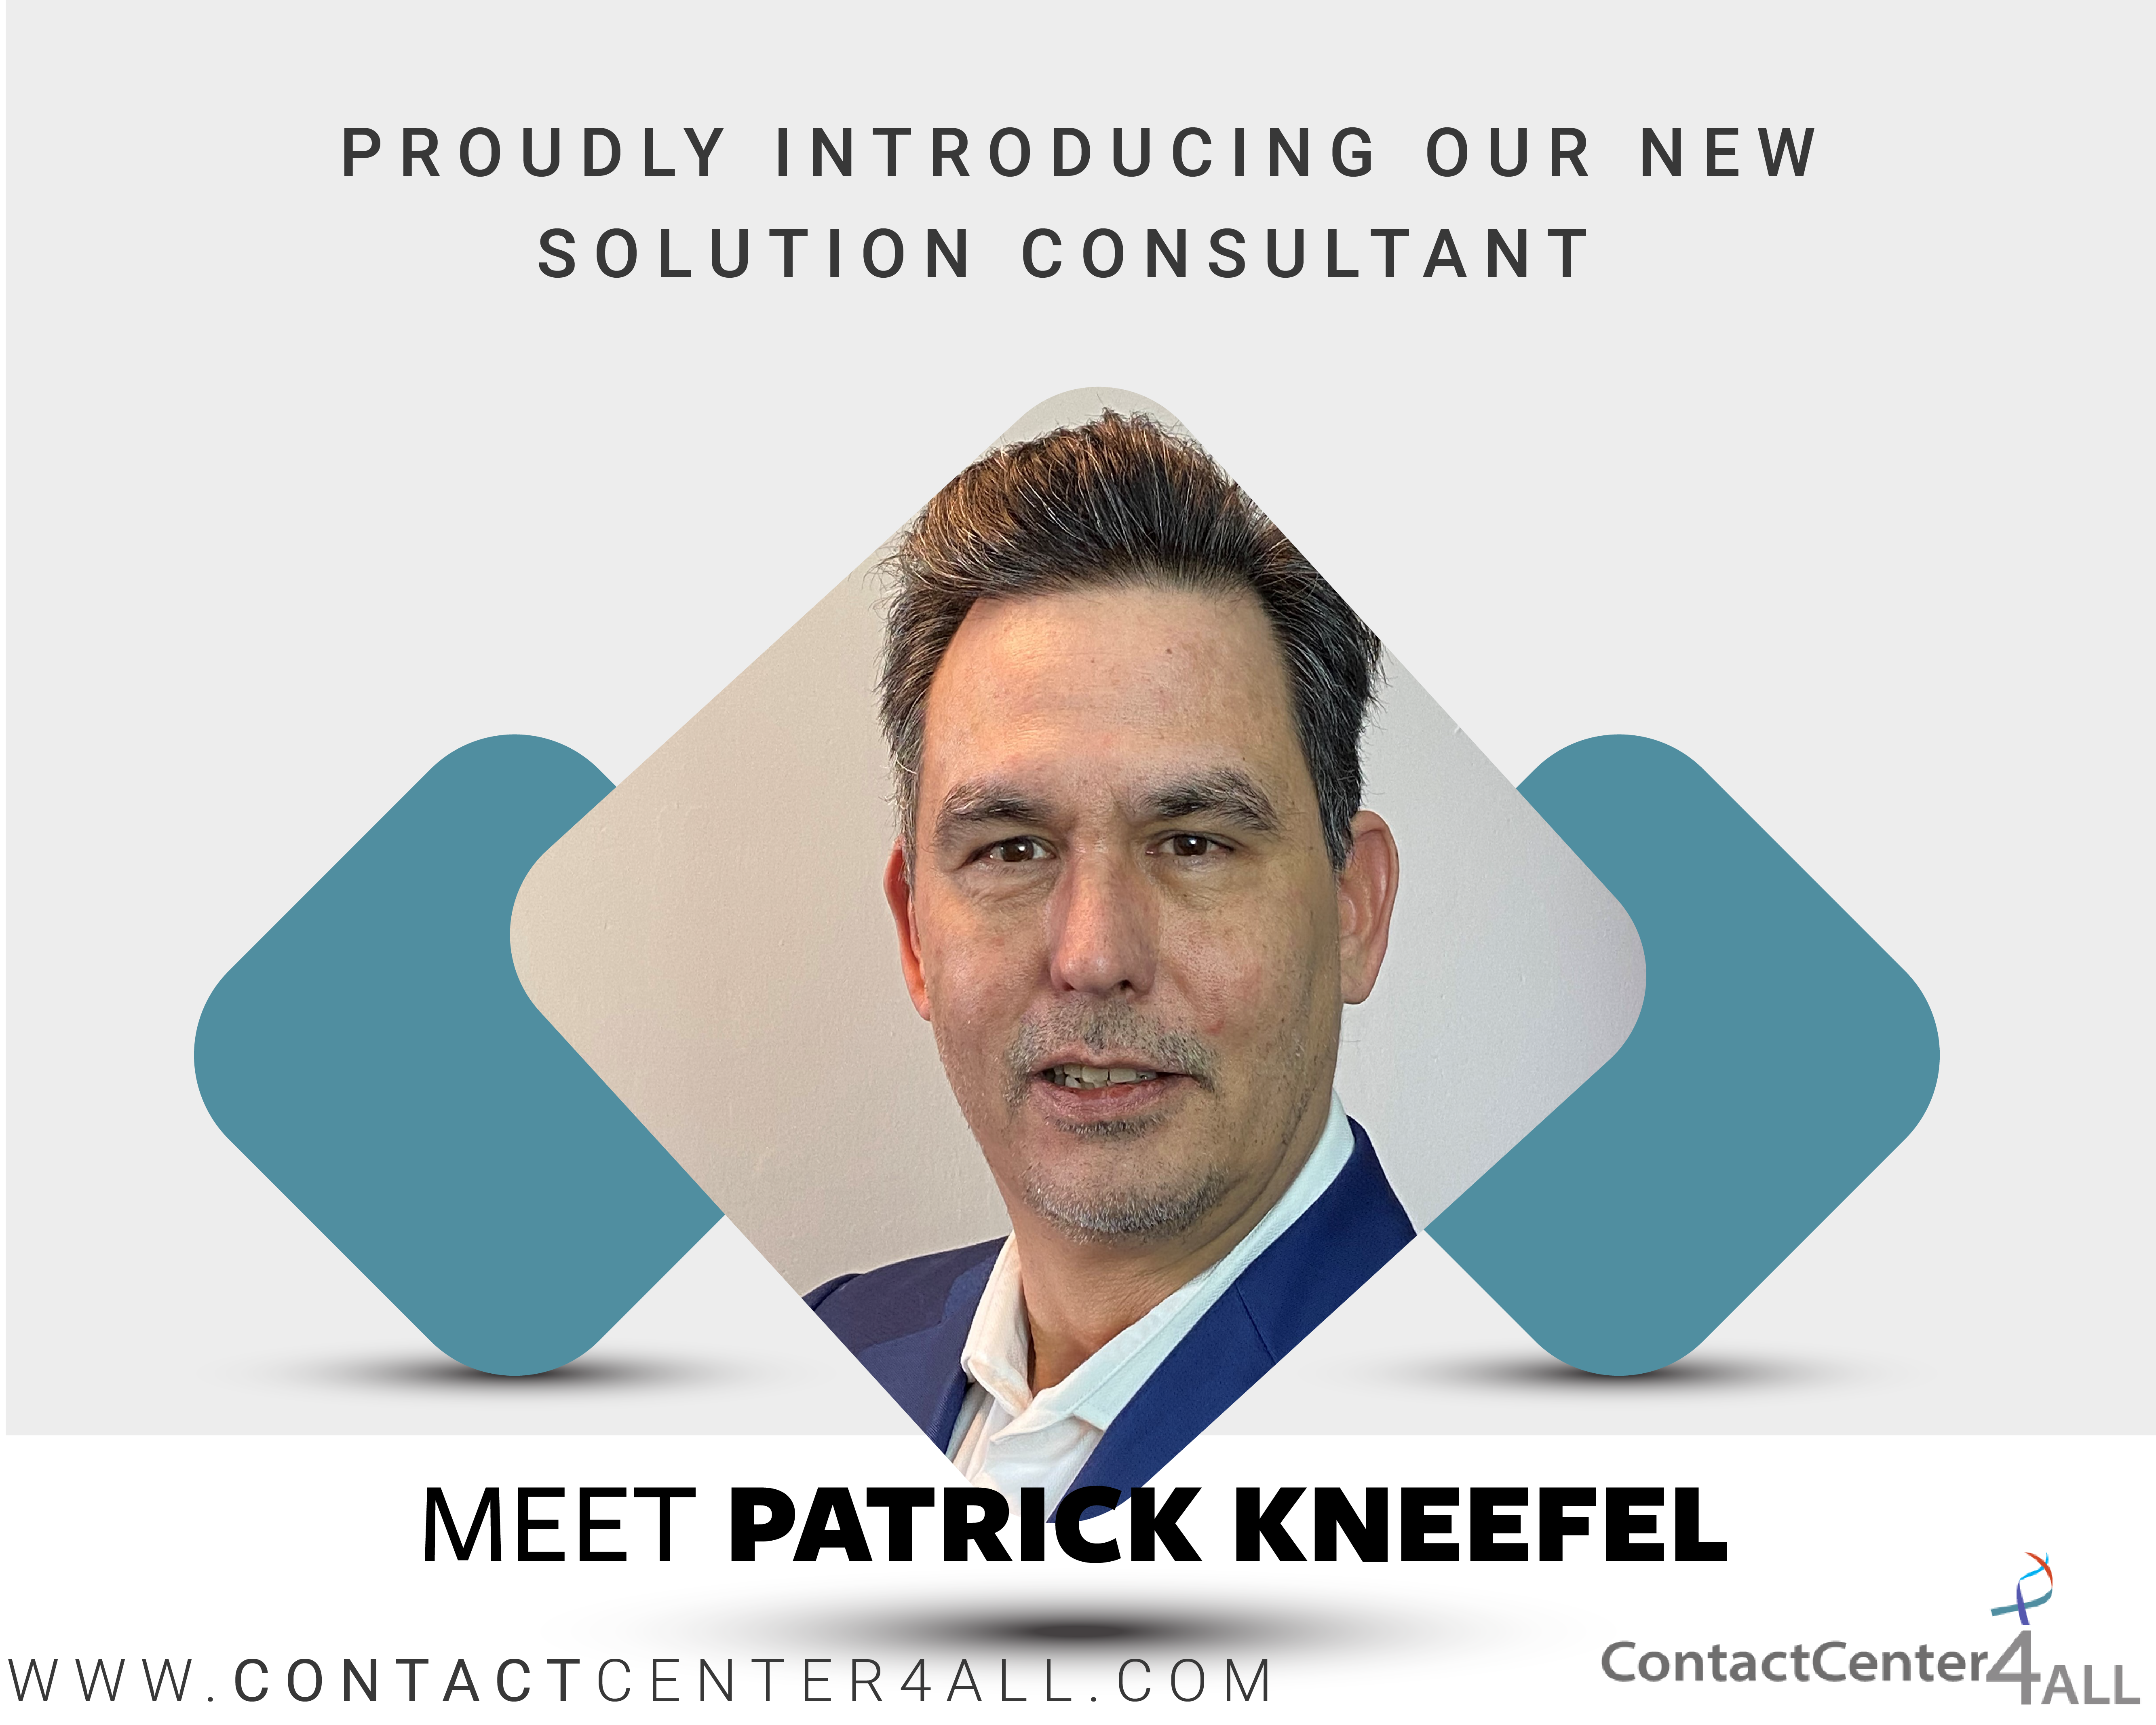 Meet Patrick Kneefel